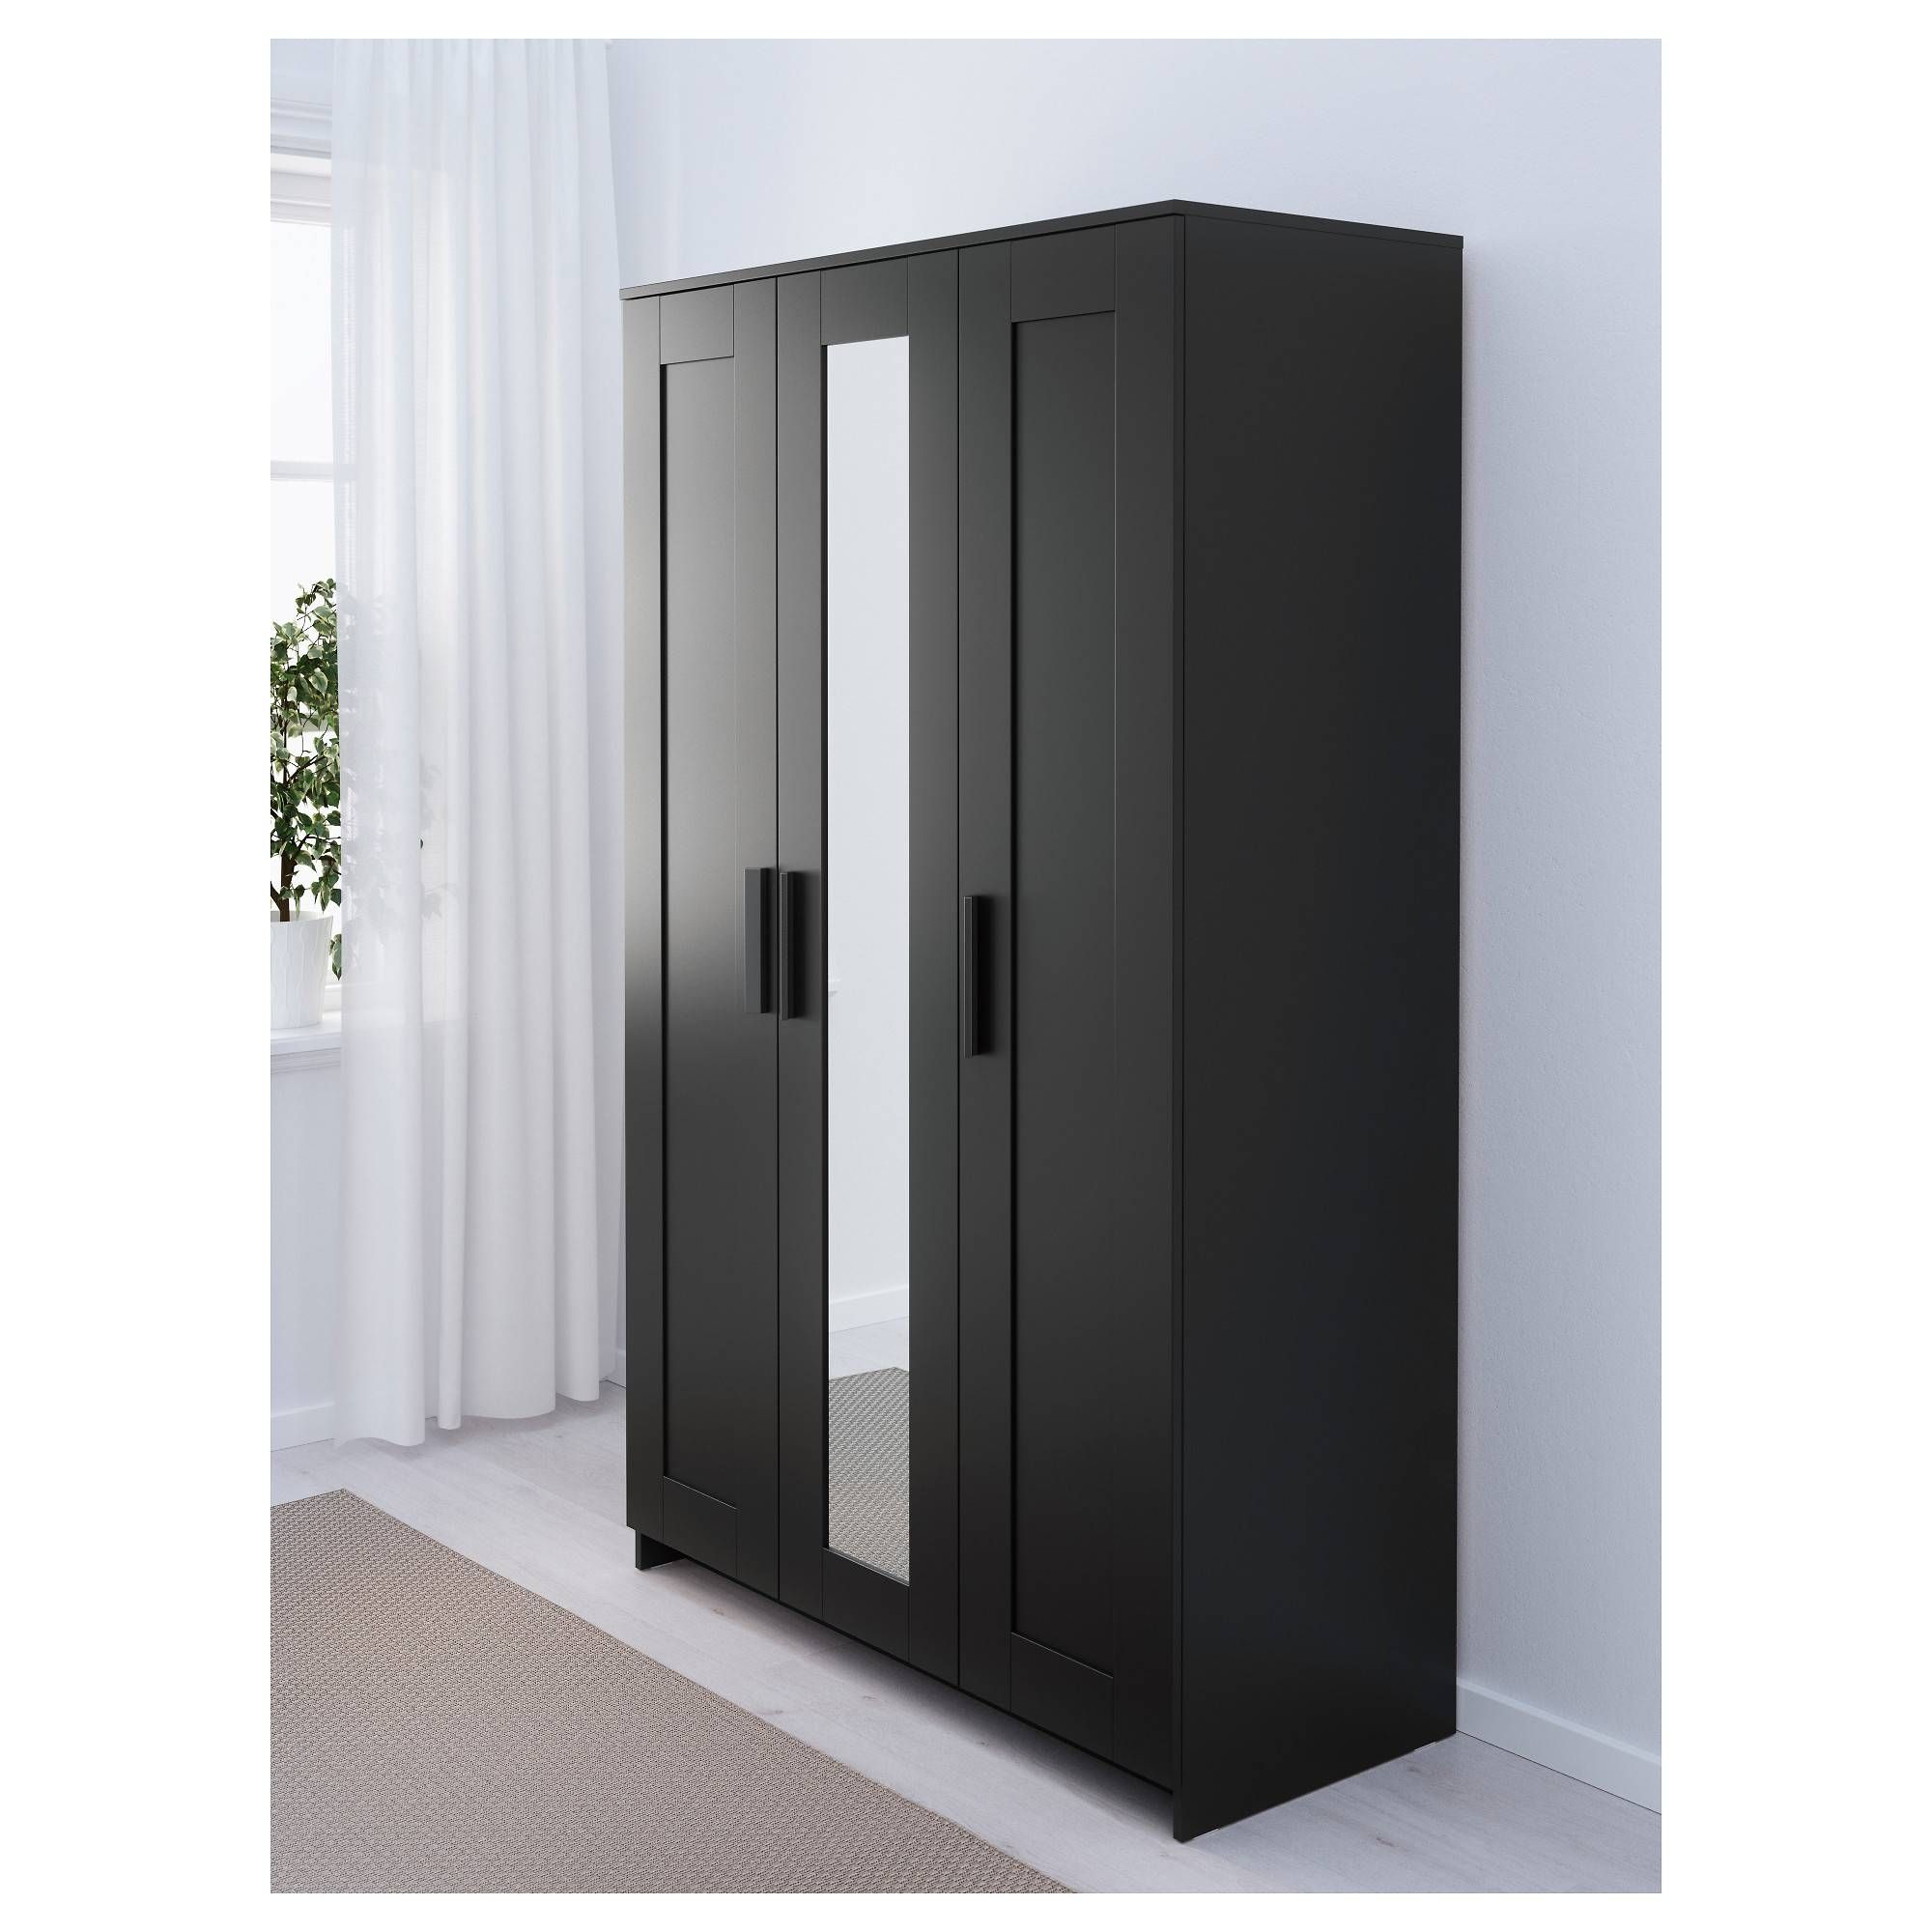 Brimnes Wardrobe With 3 Doors – White – Ikea Throughout Wardrobes 3 Door With Mirror (View 2 of 15)